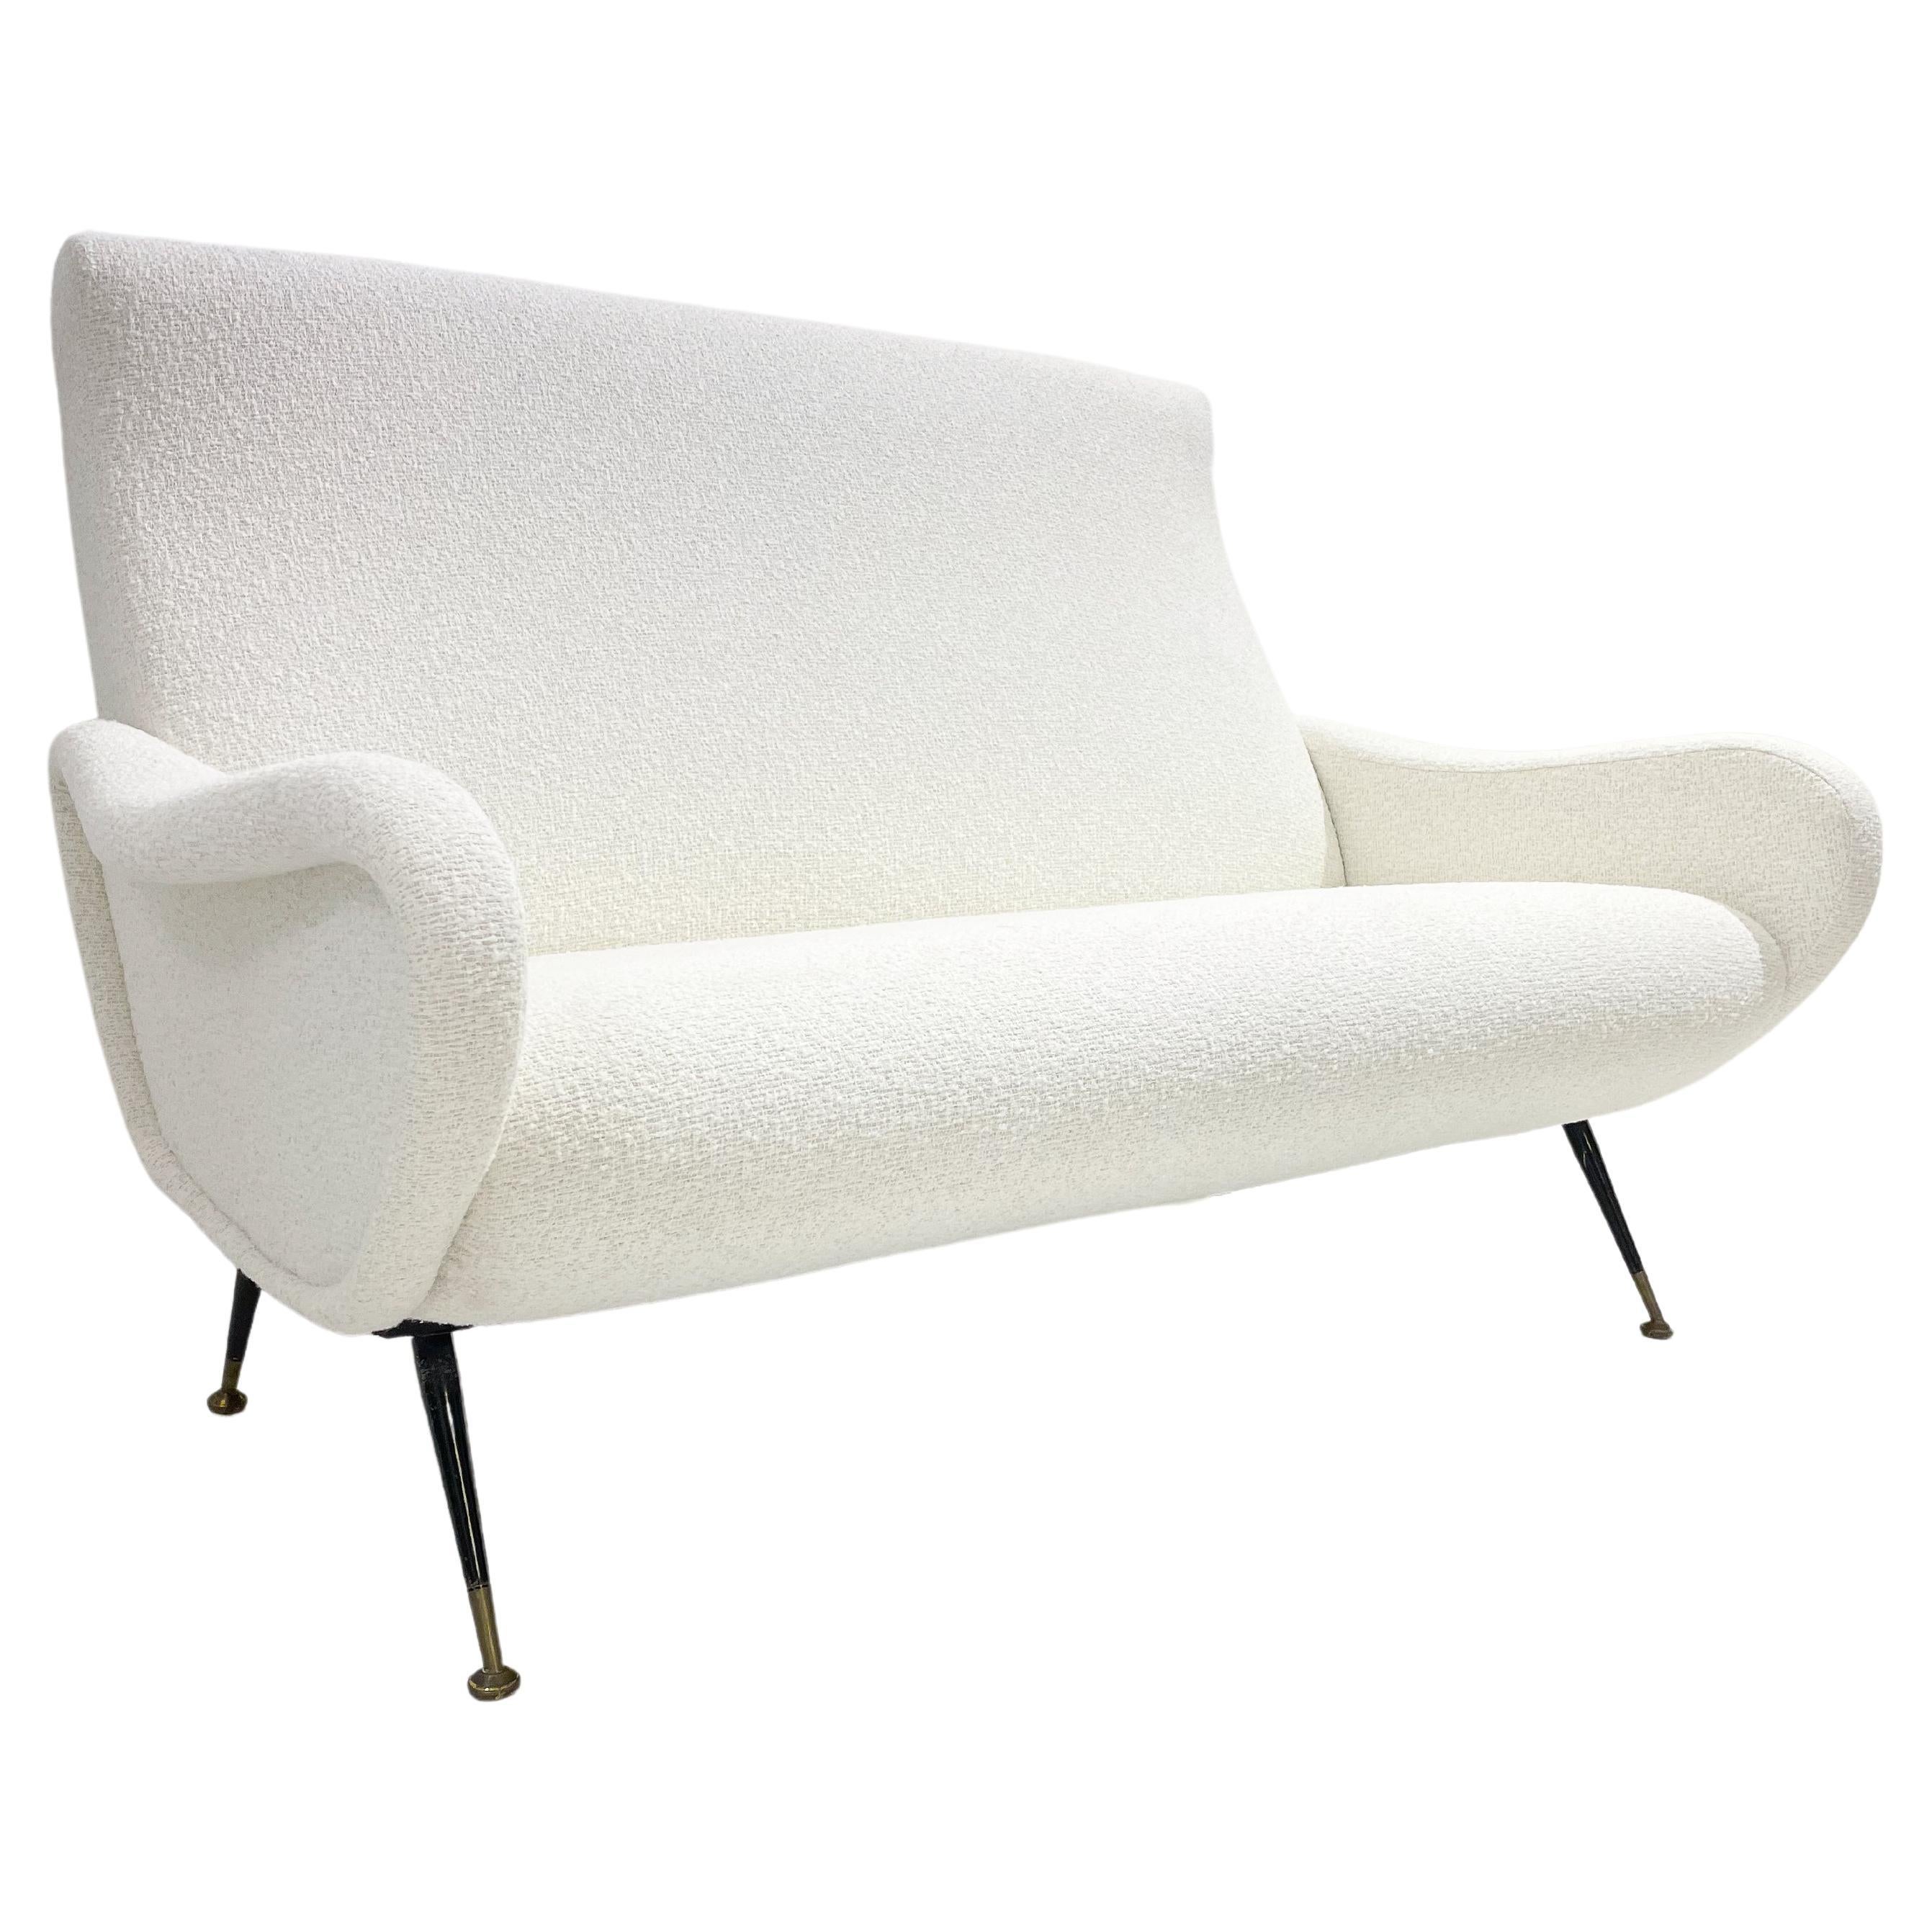 Mid-Century Modern Italian Sofa, White Fabric, 1950s For Sale